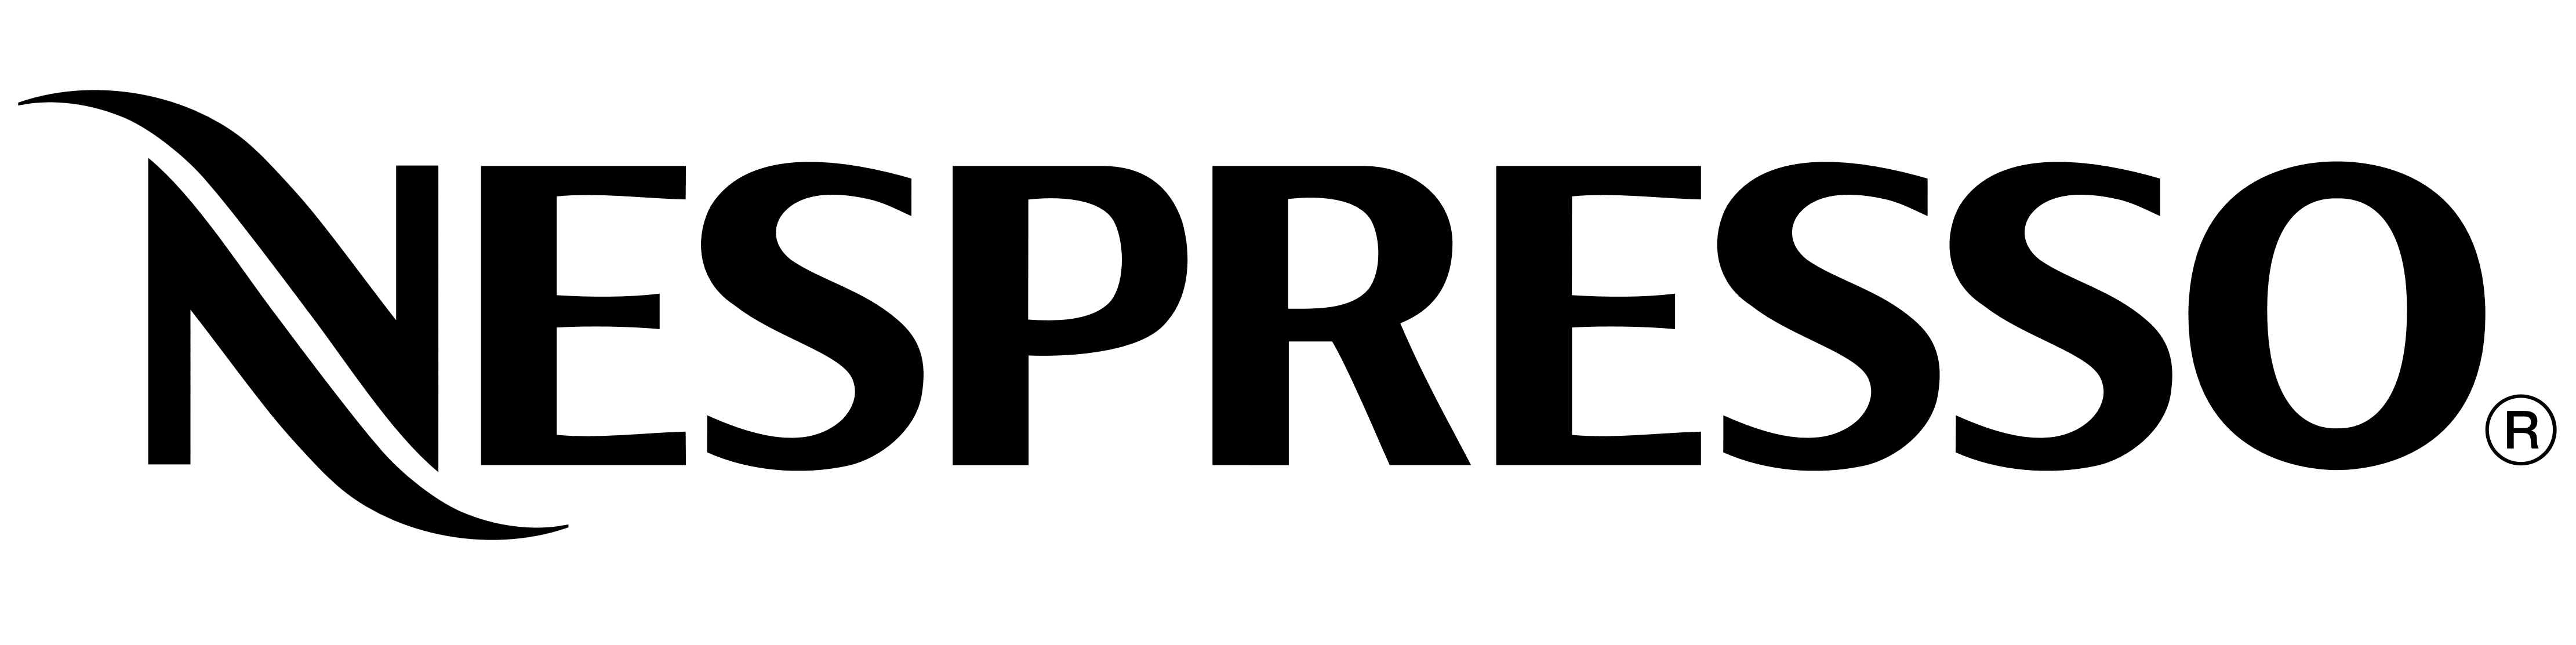 Skur Fil defile File:Nespresso logo.png - Wikimedia Commons